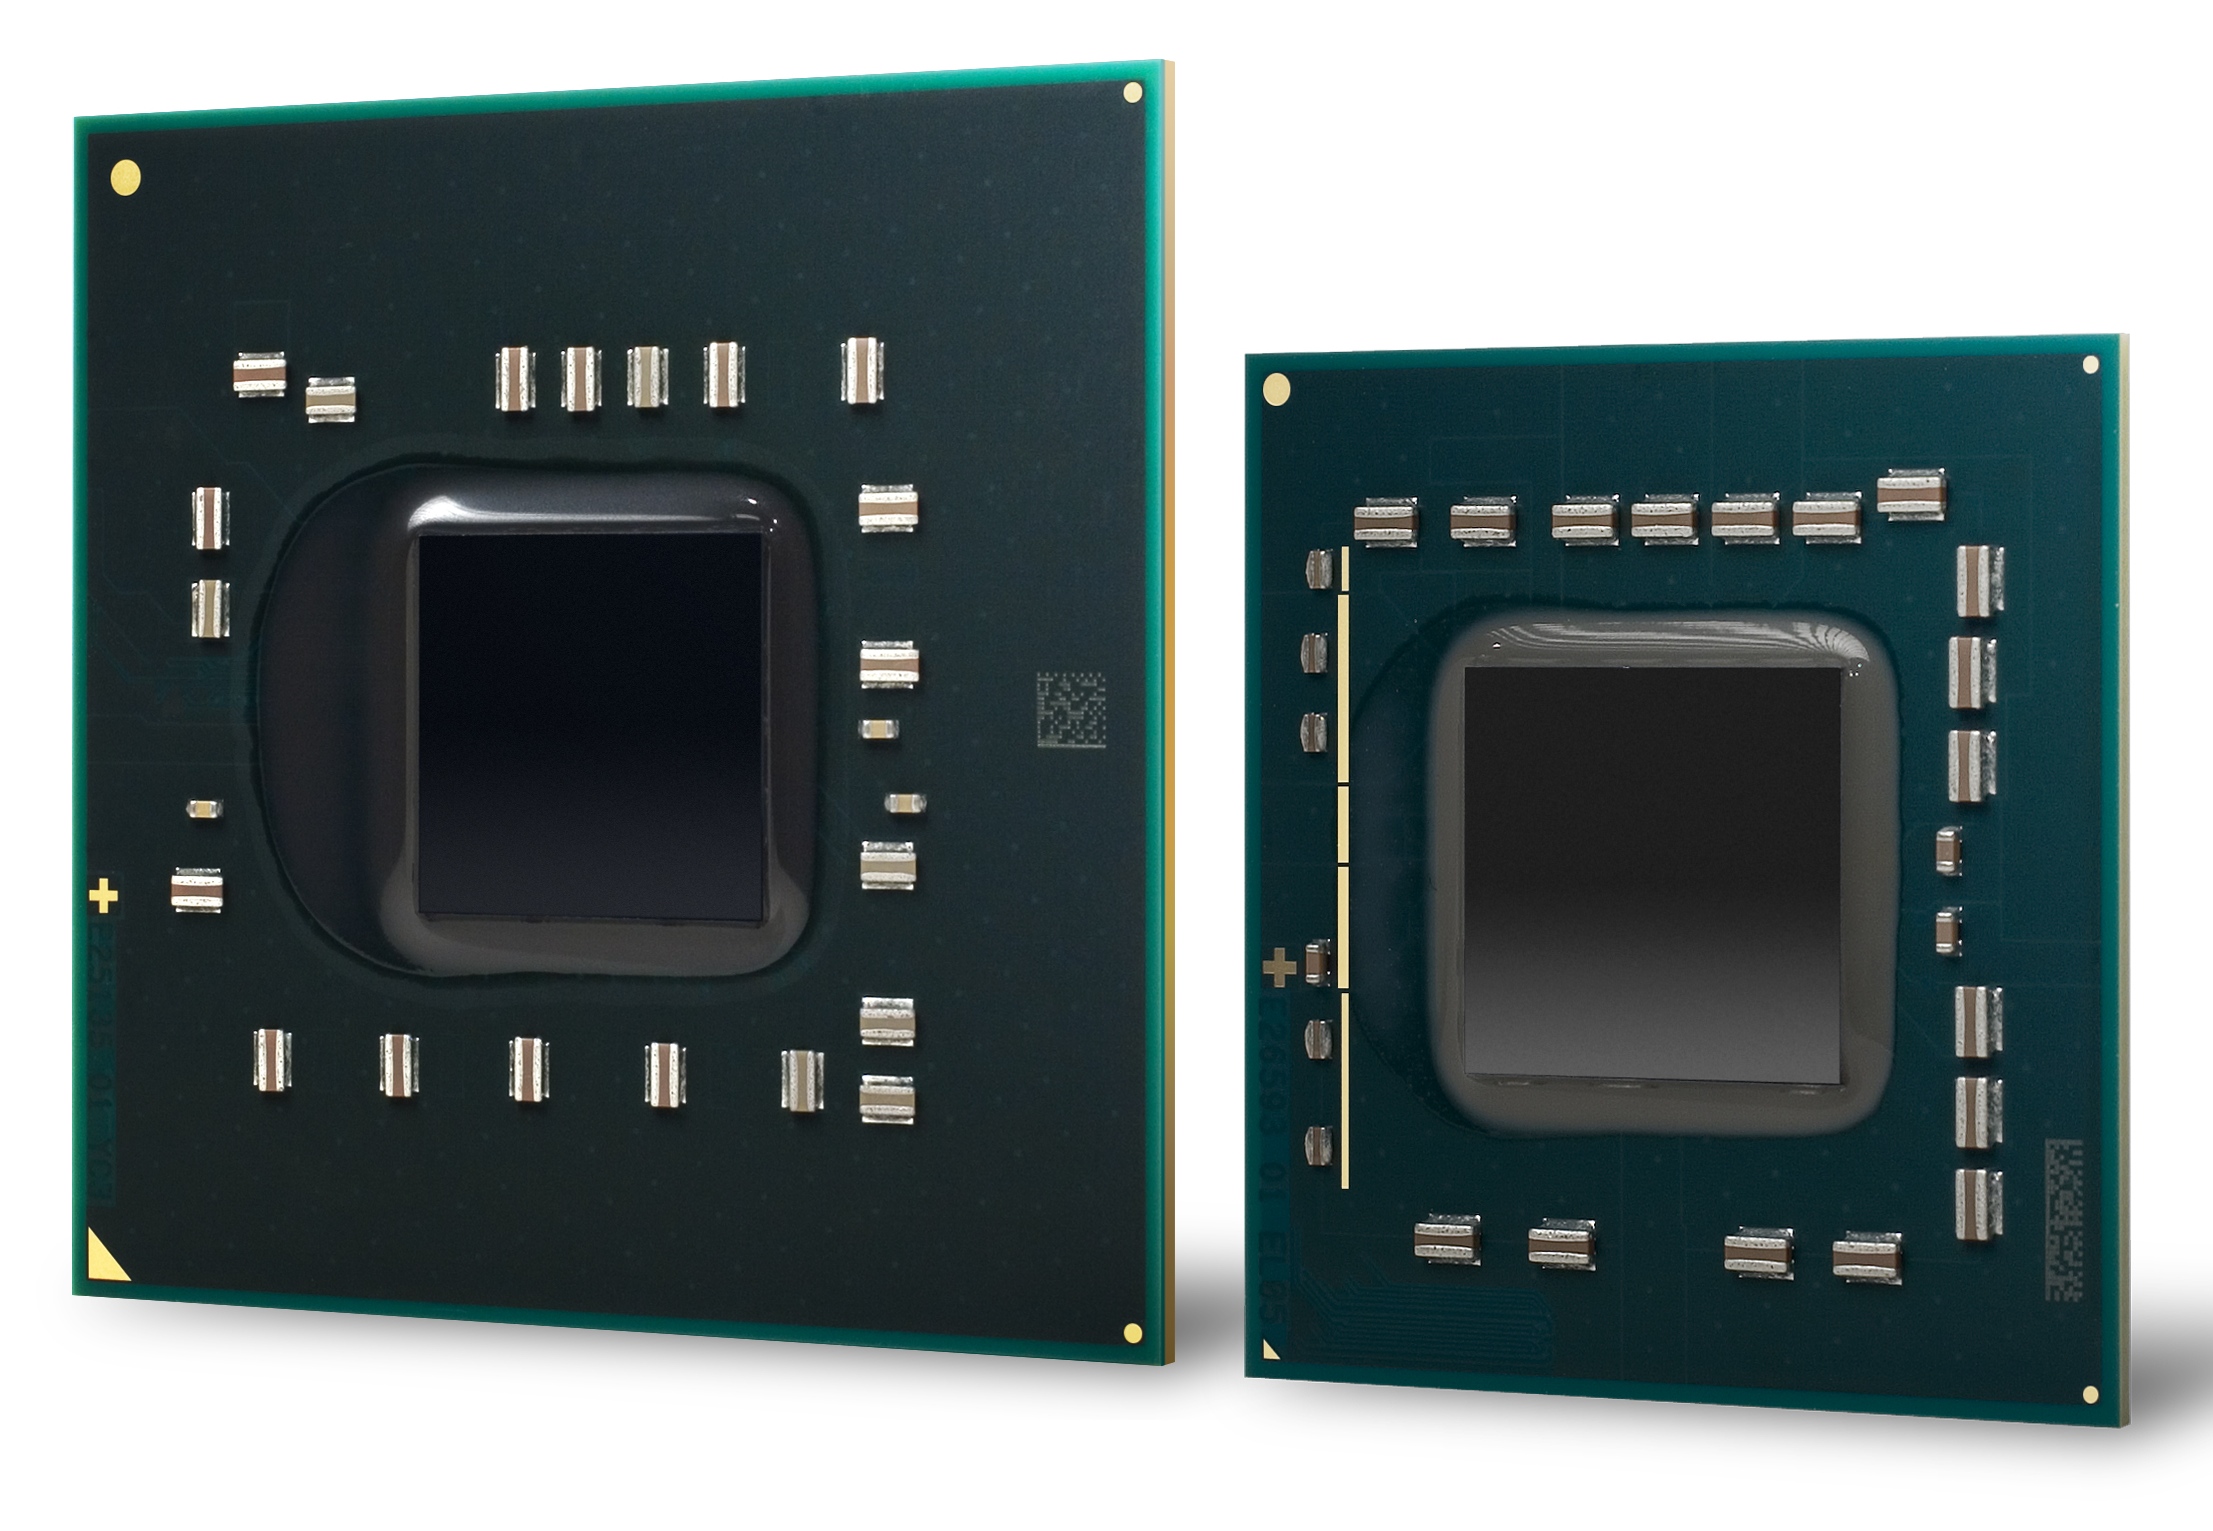 Intel gma 4500mhd. Графический процессор Intel GMA 3150. Intel GMA x4500 видеокарта. Intel GMA 4500mhd видеокарта. Intel GMA 3150 видеокарта.